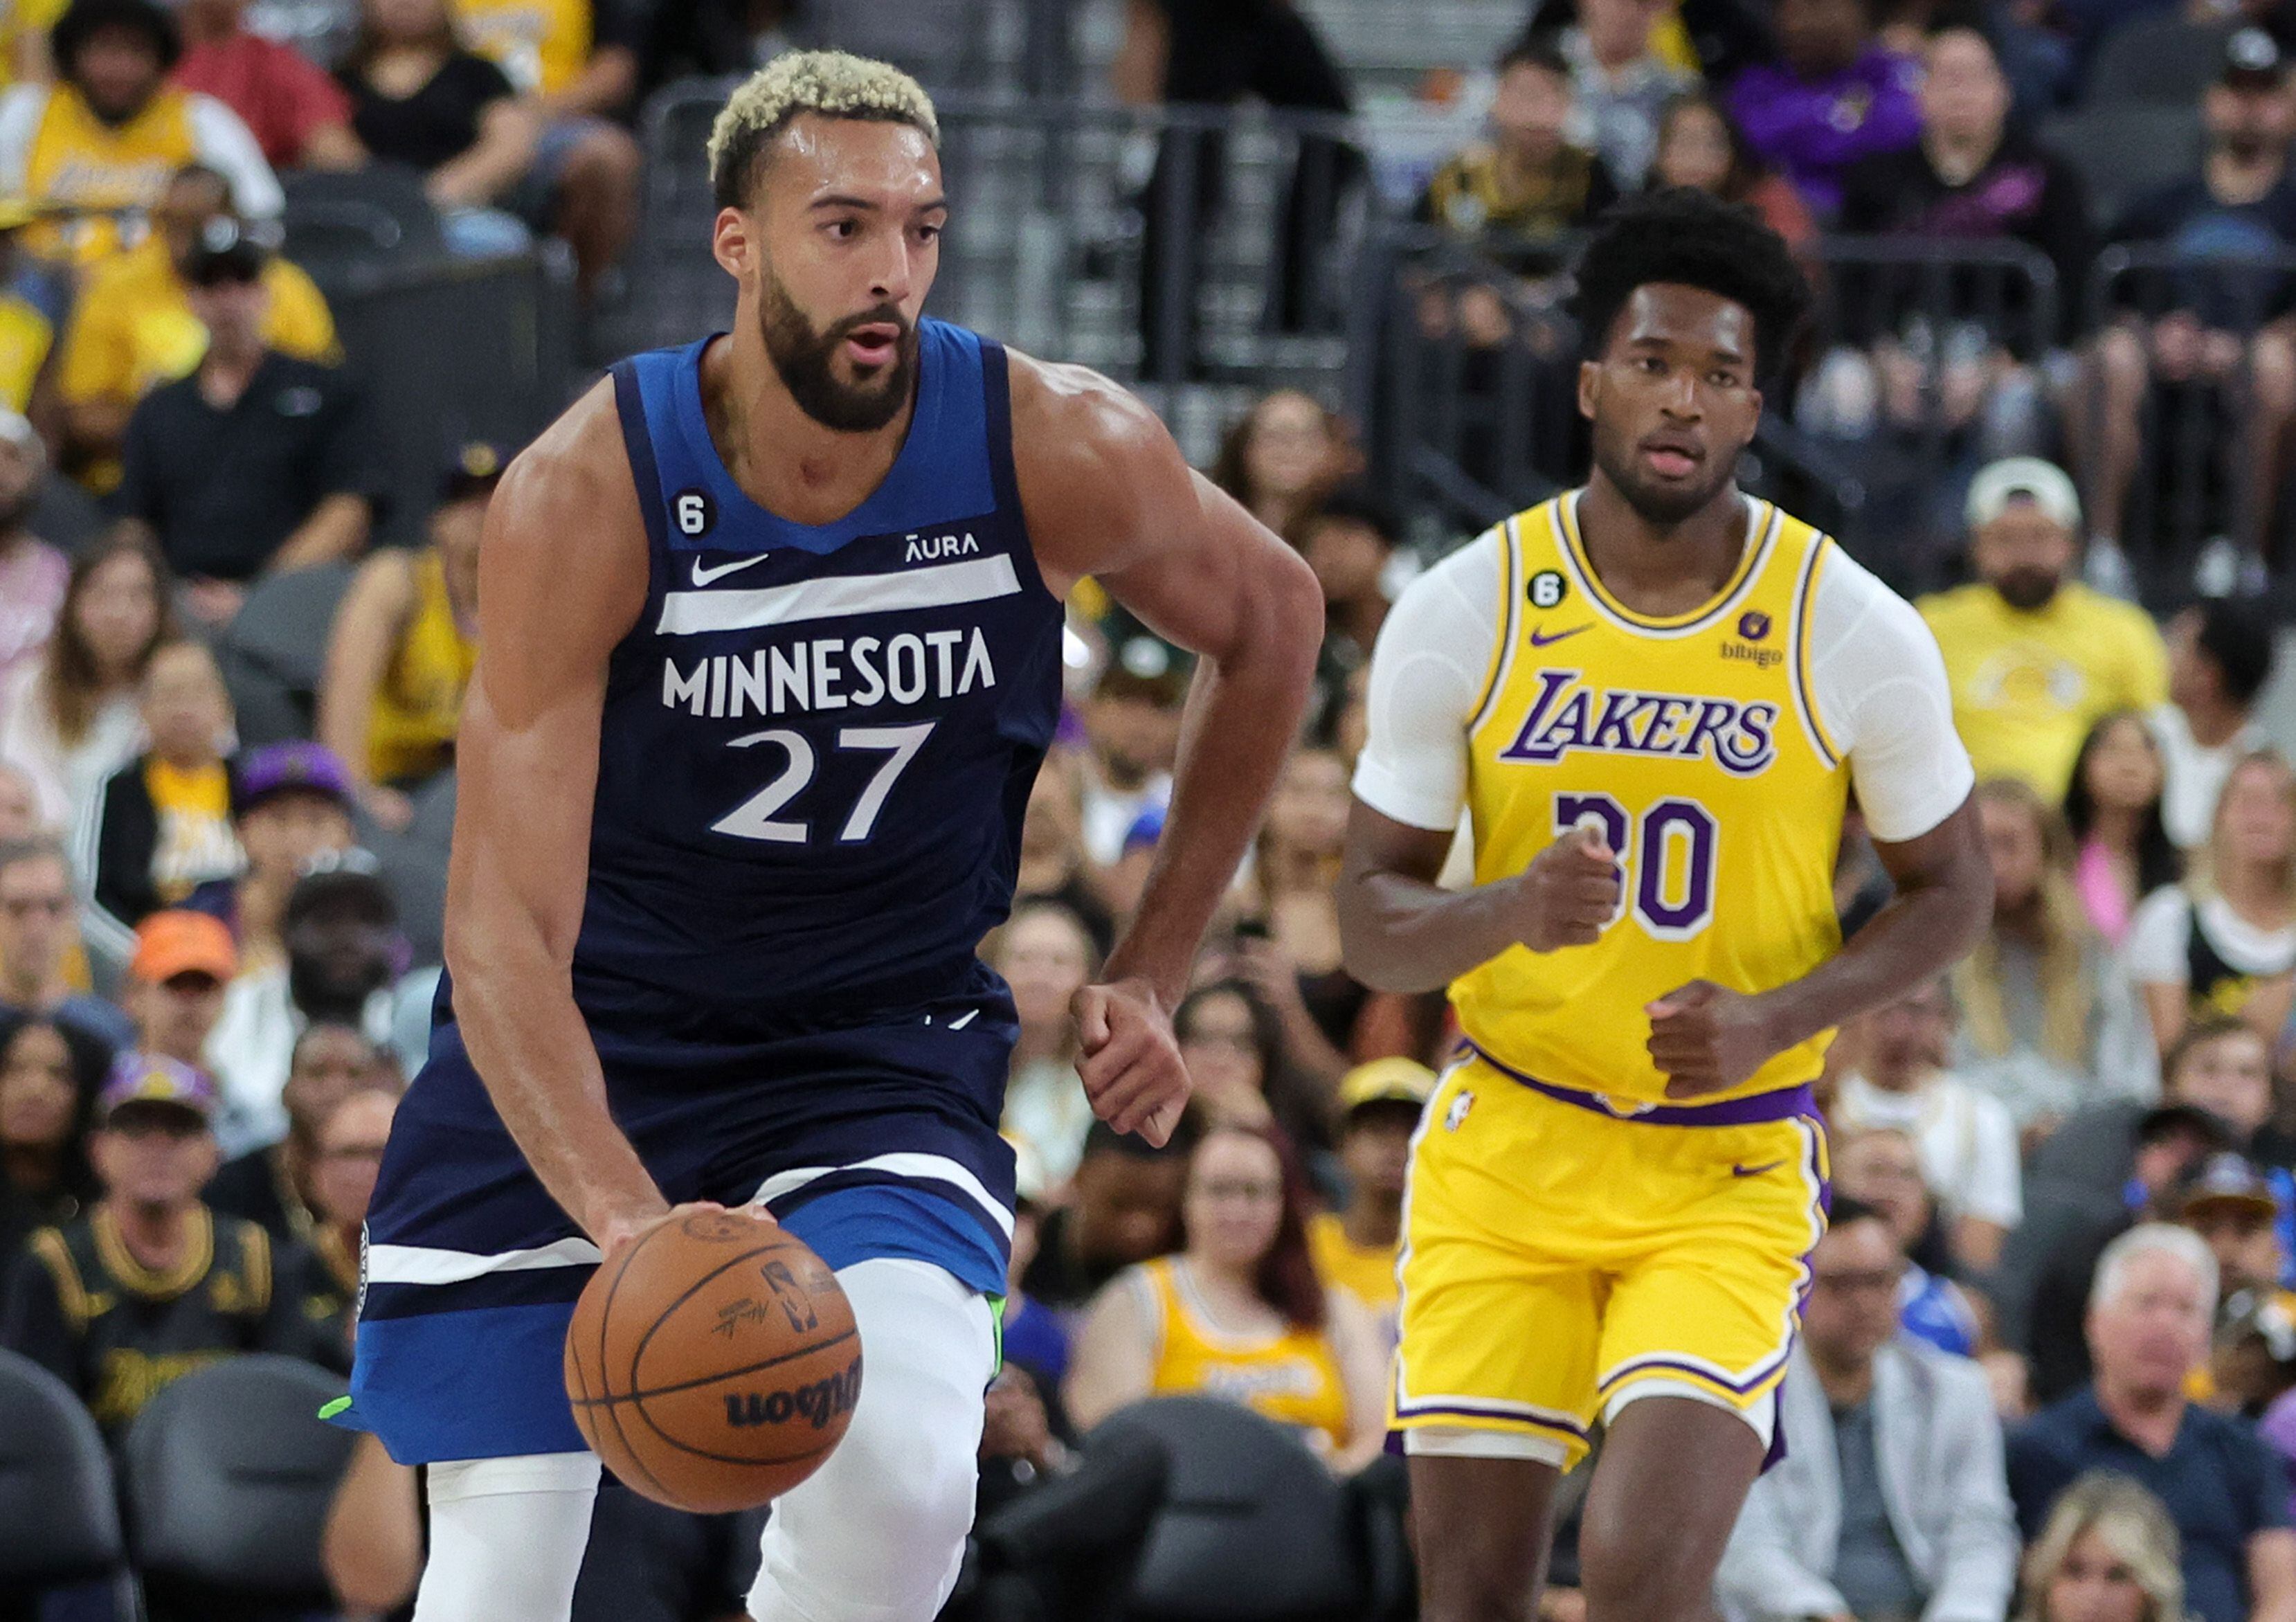 Lakers vs. Timberwolves odds, line, spread: 2021 NBA picks, Feb